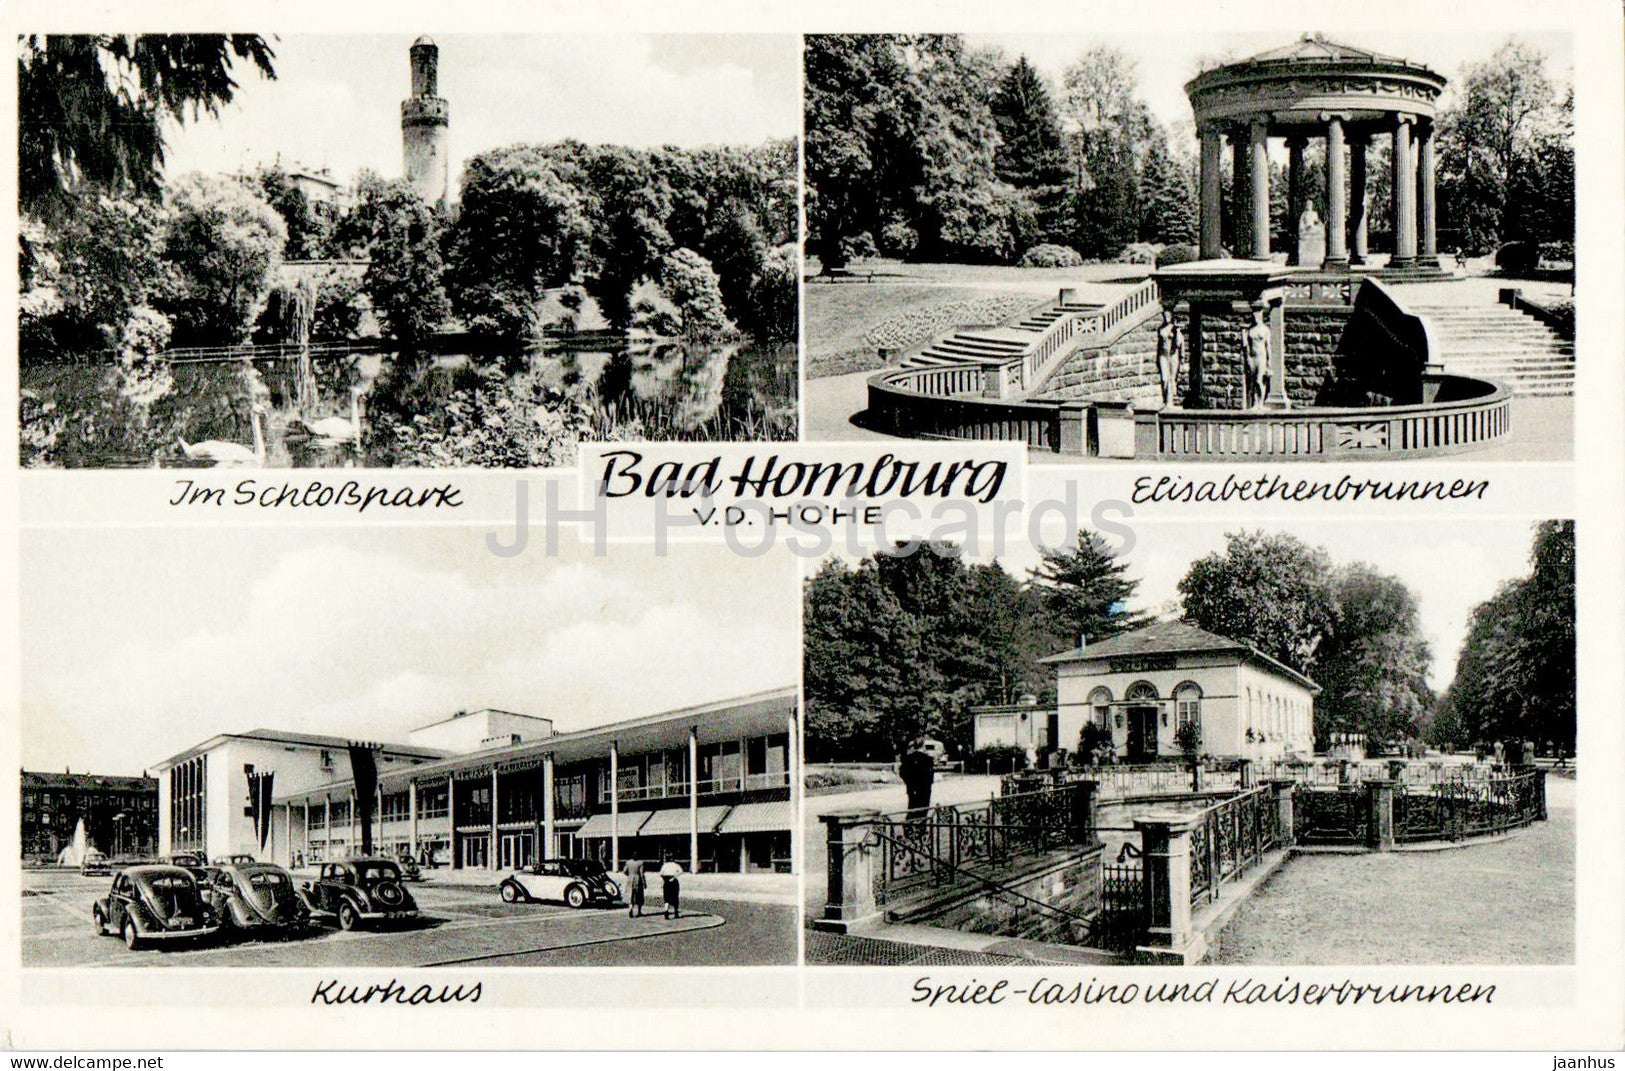 Bad Homburg - Schlosspark - Elisabethenbrunnen - Kurhaus - Spiel Casino - old car - old postcard - 1953 - Germany - used - JH Postcards